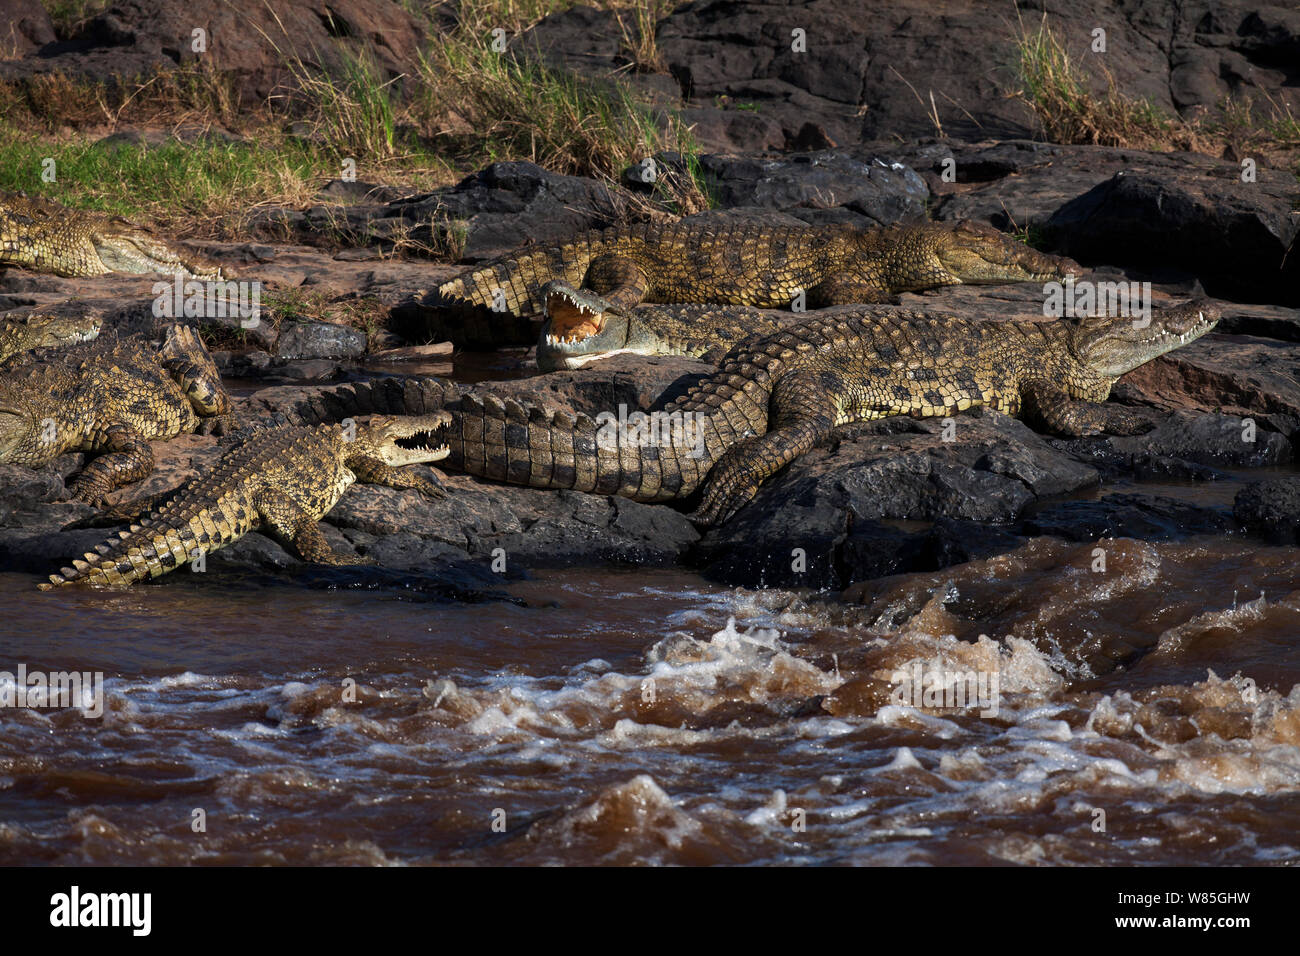 Nile crocodiles (Crocodylus niloticus) resting on rocks. Maasai Mara National Reserve, Kenya. Stock Photo